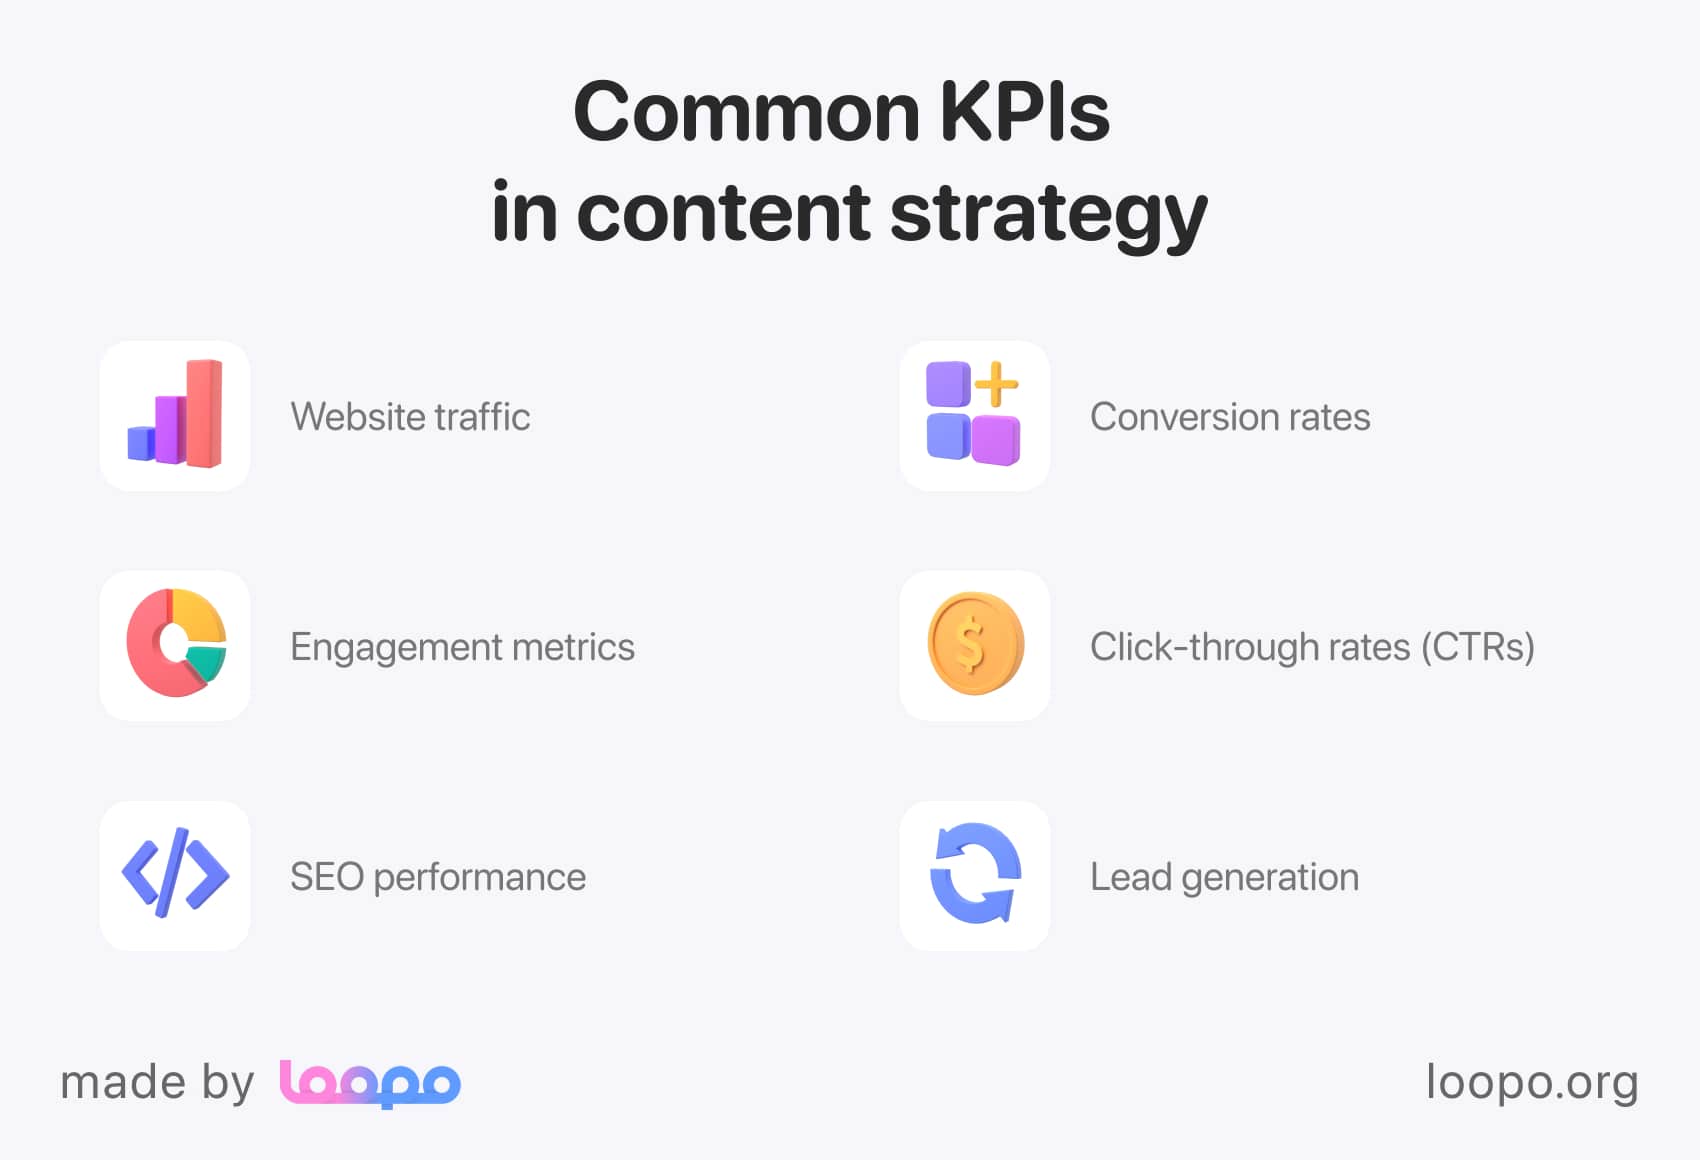 KPIs popular in content marketing